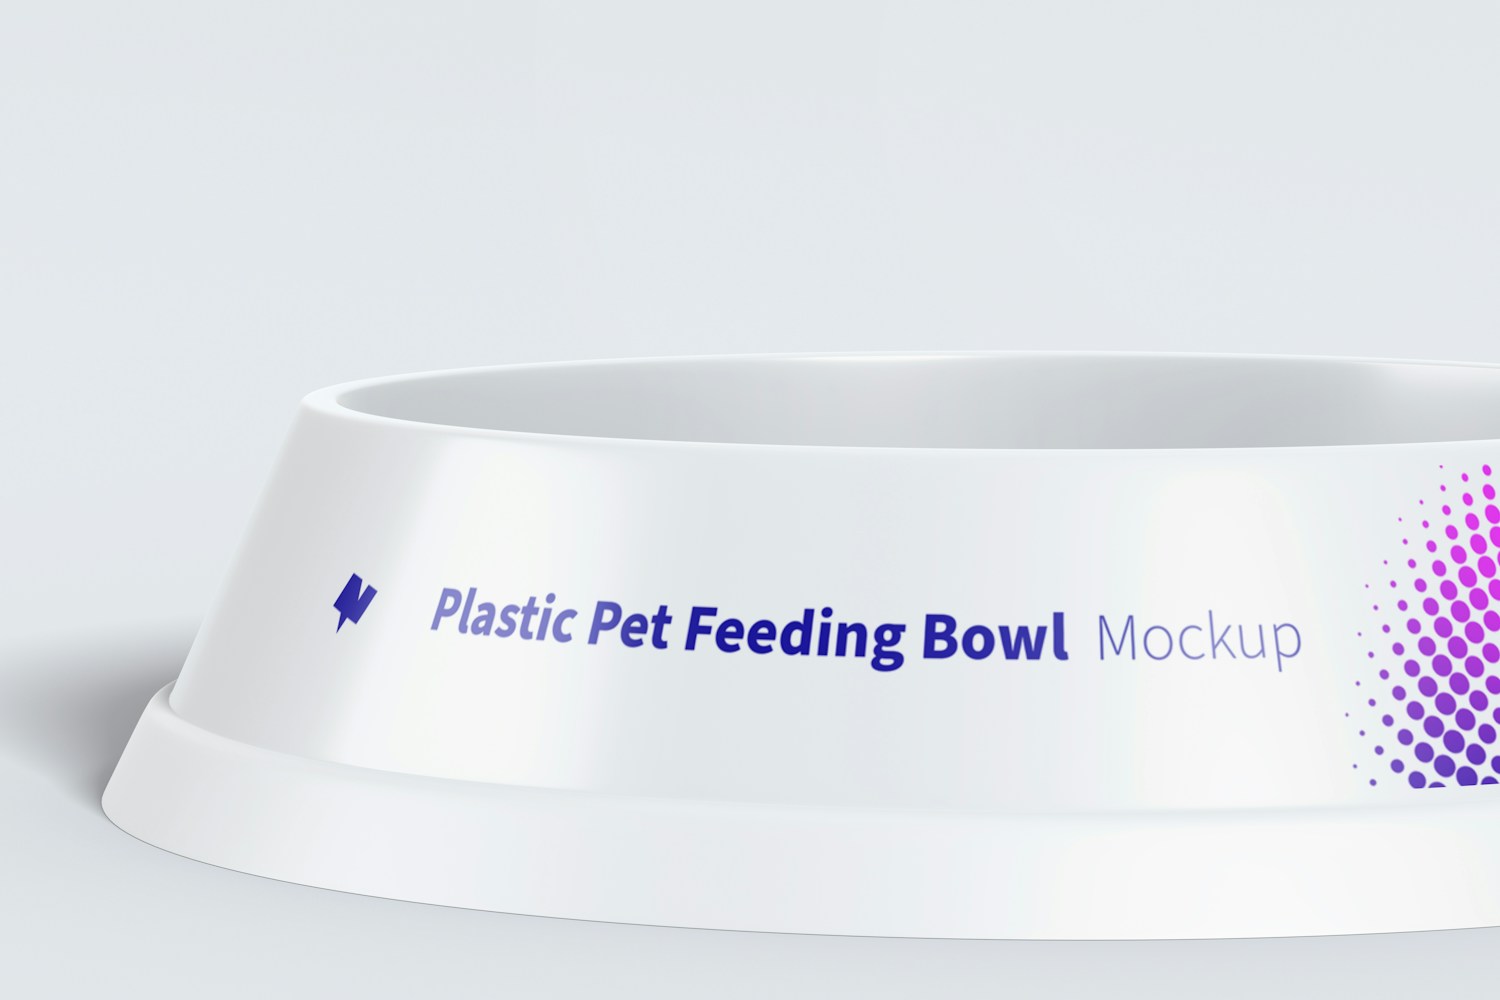 Plastic Pet Feeding Bowl Mockup